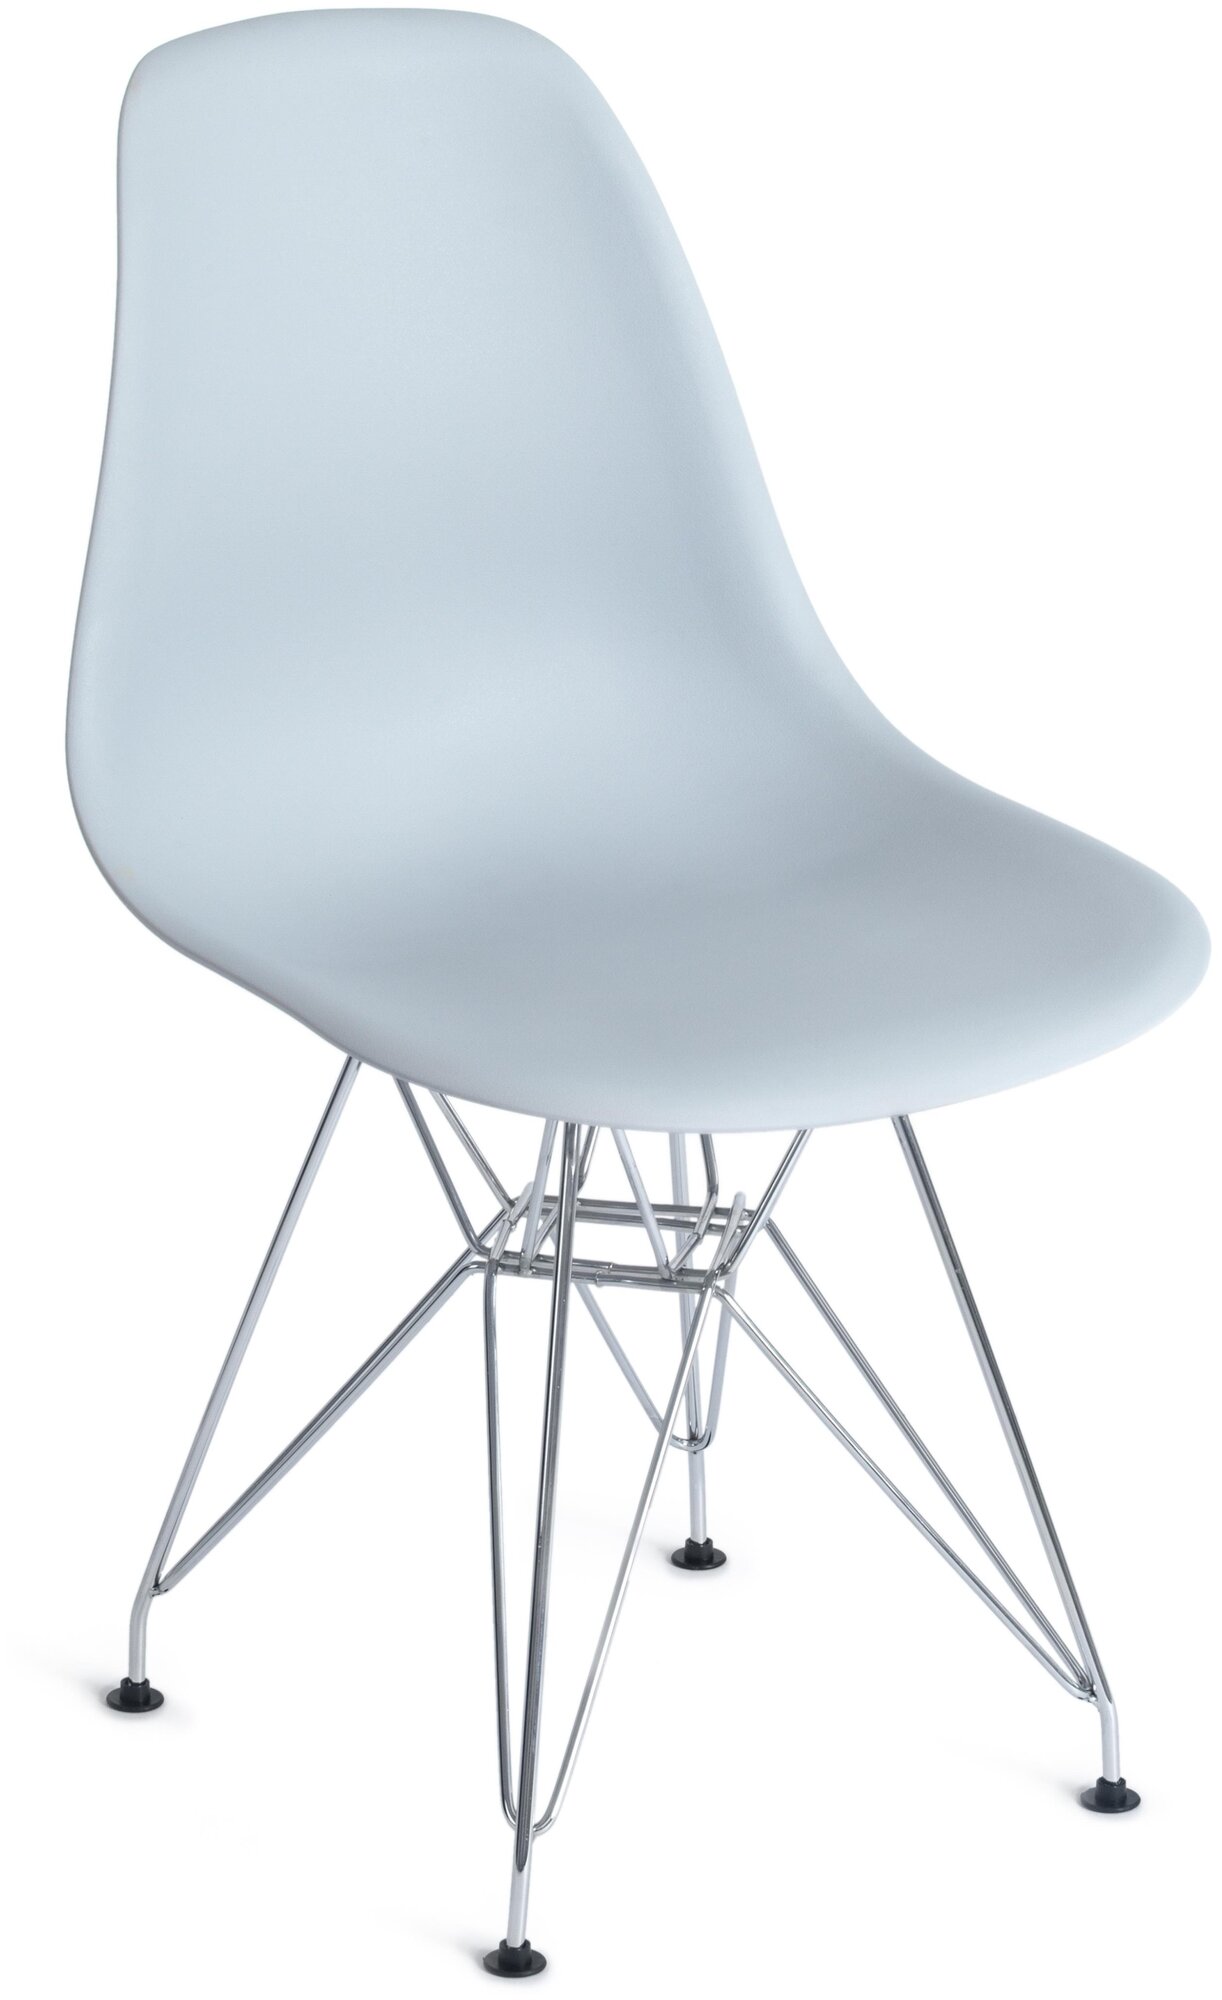 Стул Secret De Maison Cindy Iron Chair (Eames) (mod. 002), Цвет корпуса: серый, хром